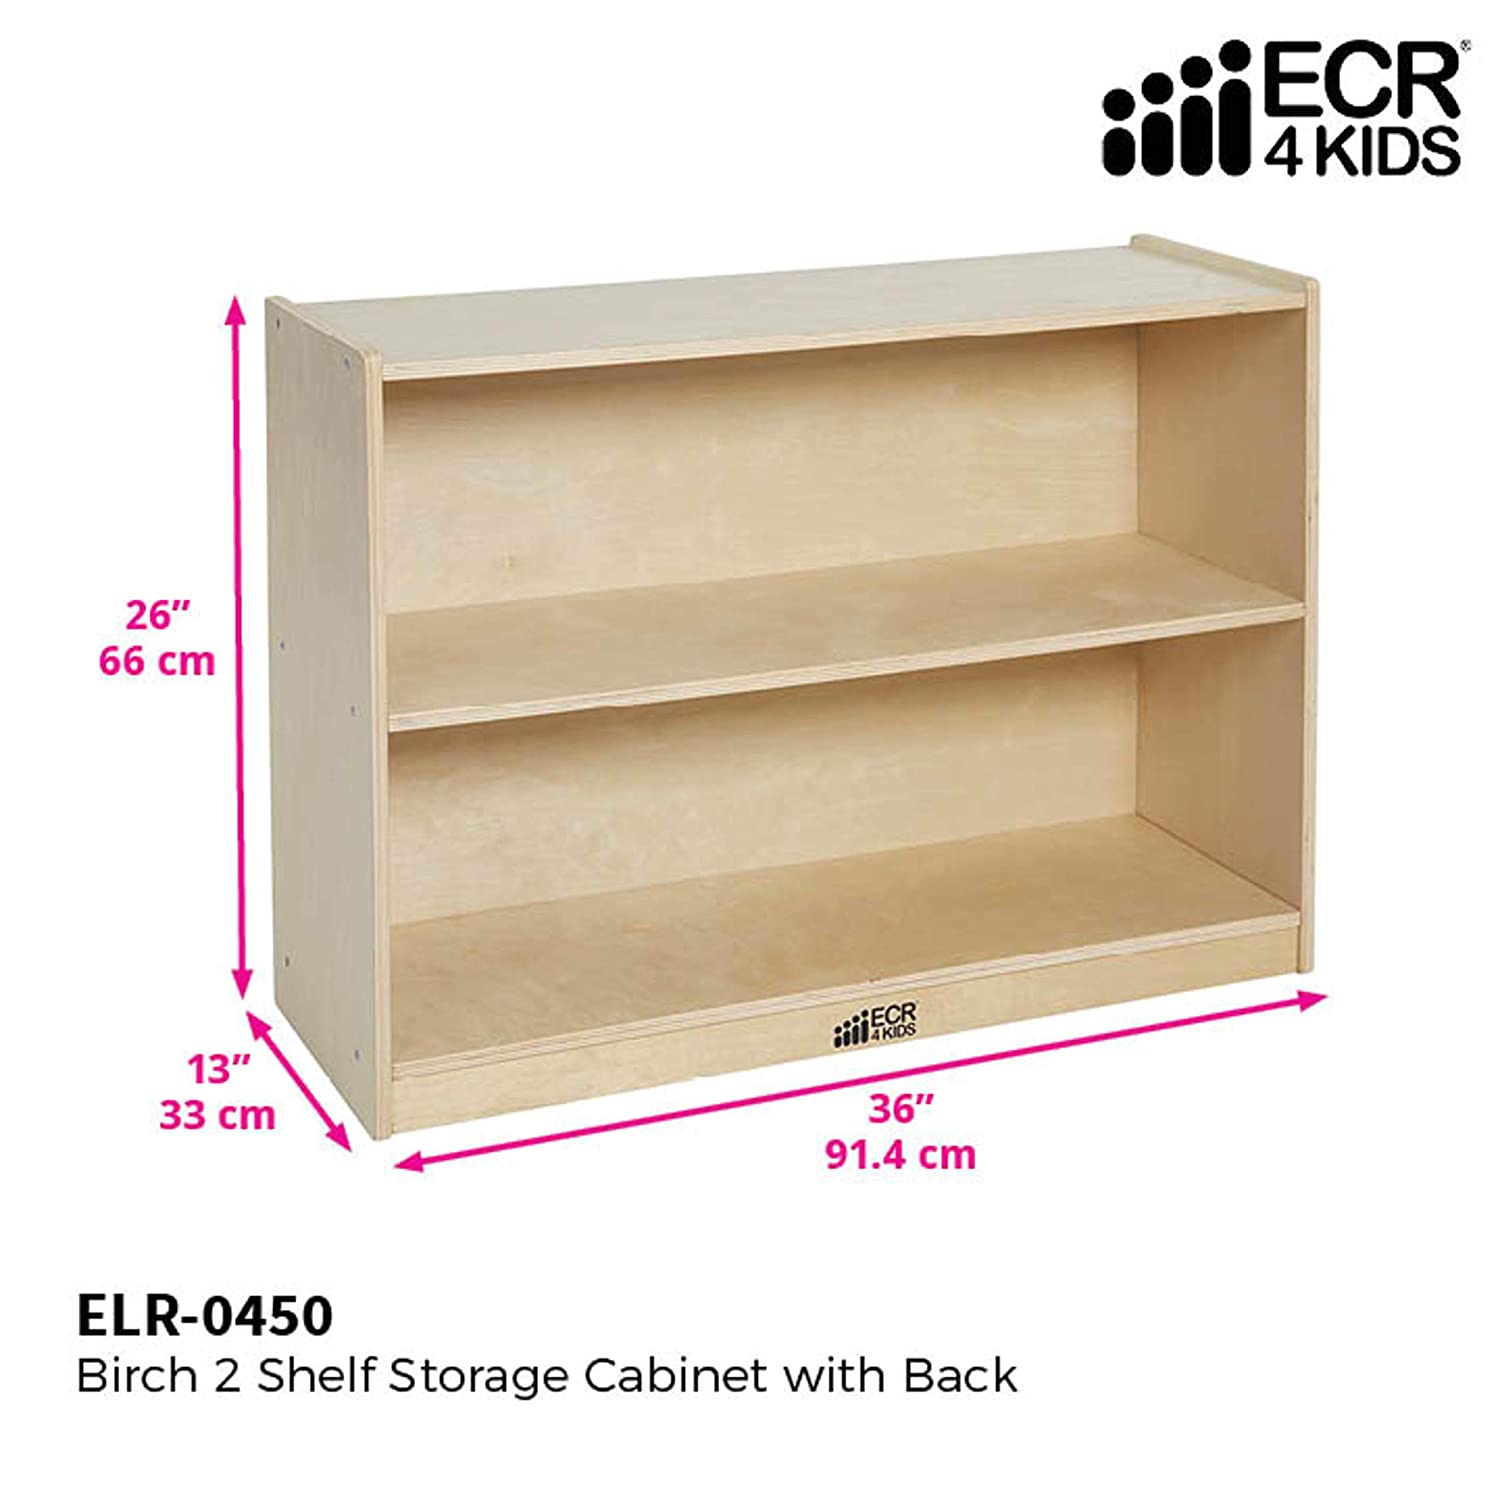 B00BH0RJCE ECR4Kids - ELR-0450 Birch 2 Shelf Storage Cabinet with Back, Wood Book Shelf Organizer/Toy Storage for Kids, Natural